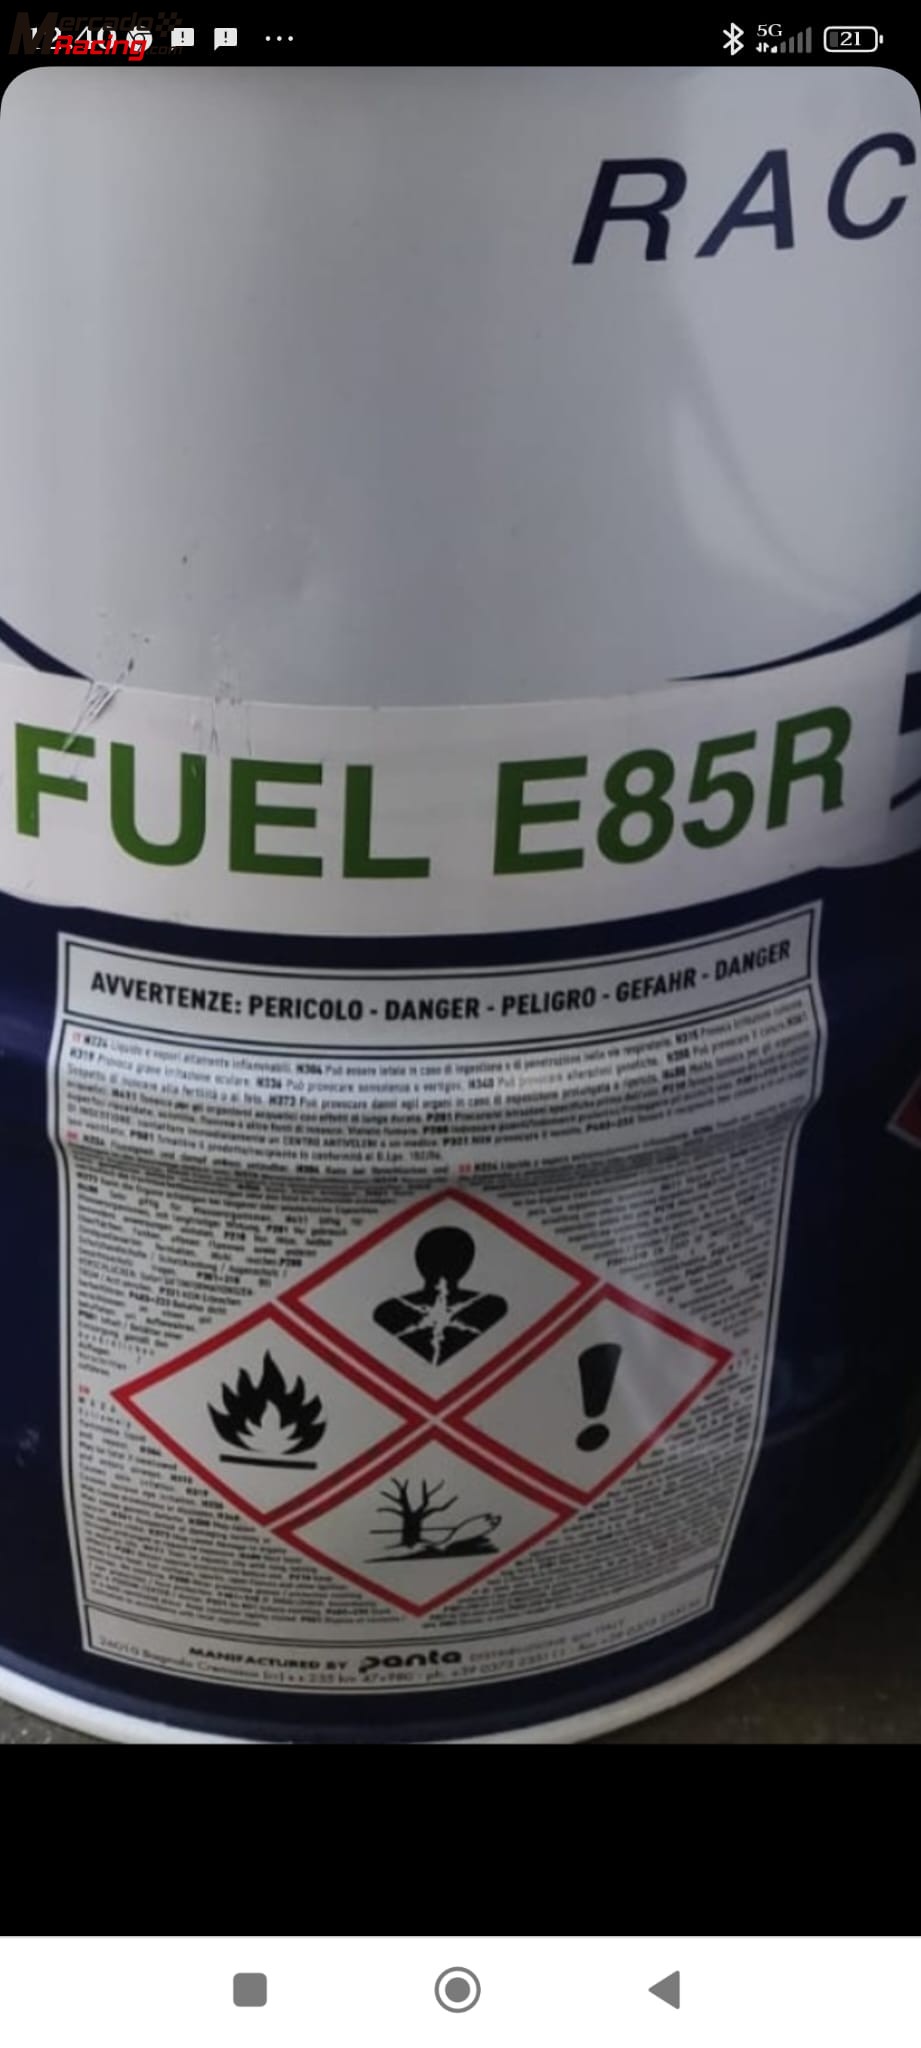 Venta de etanol de competición e85r a precio razonable